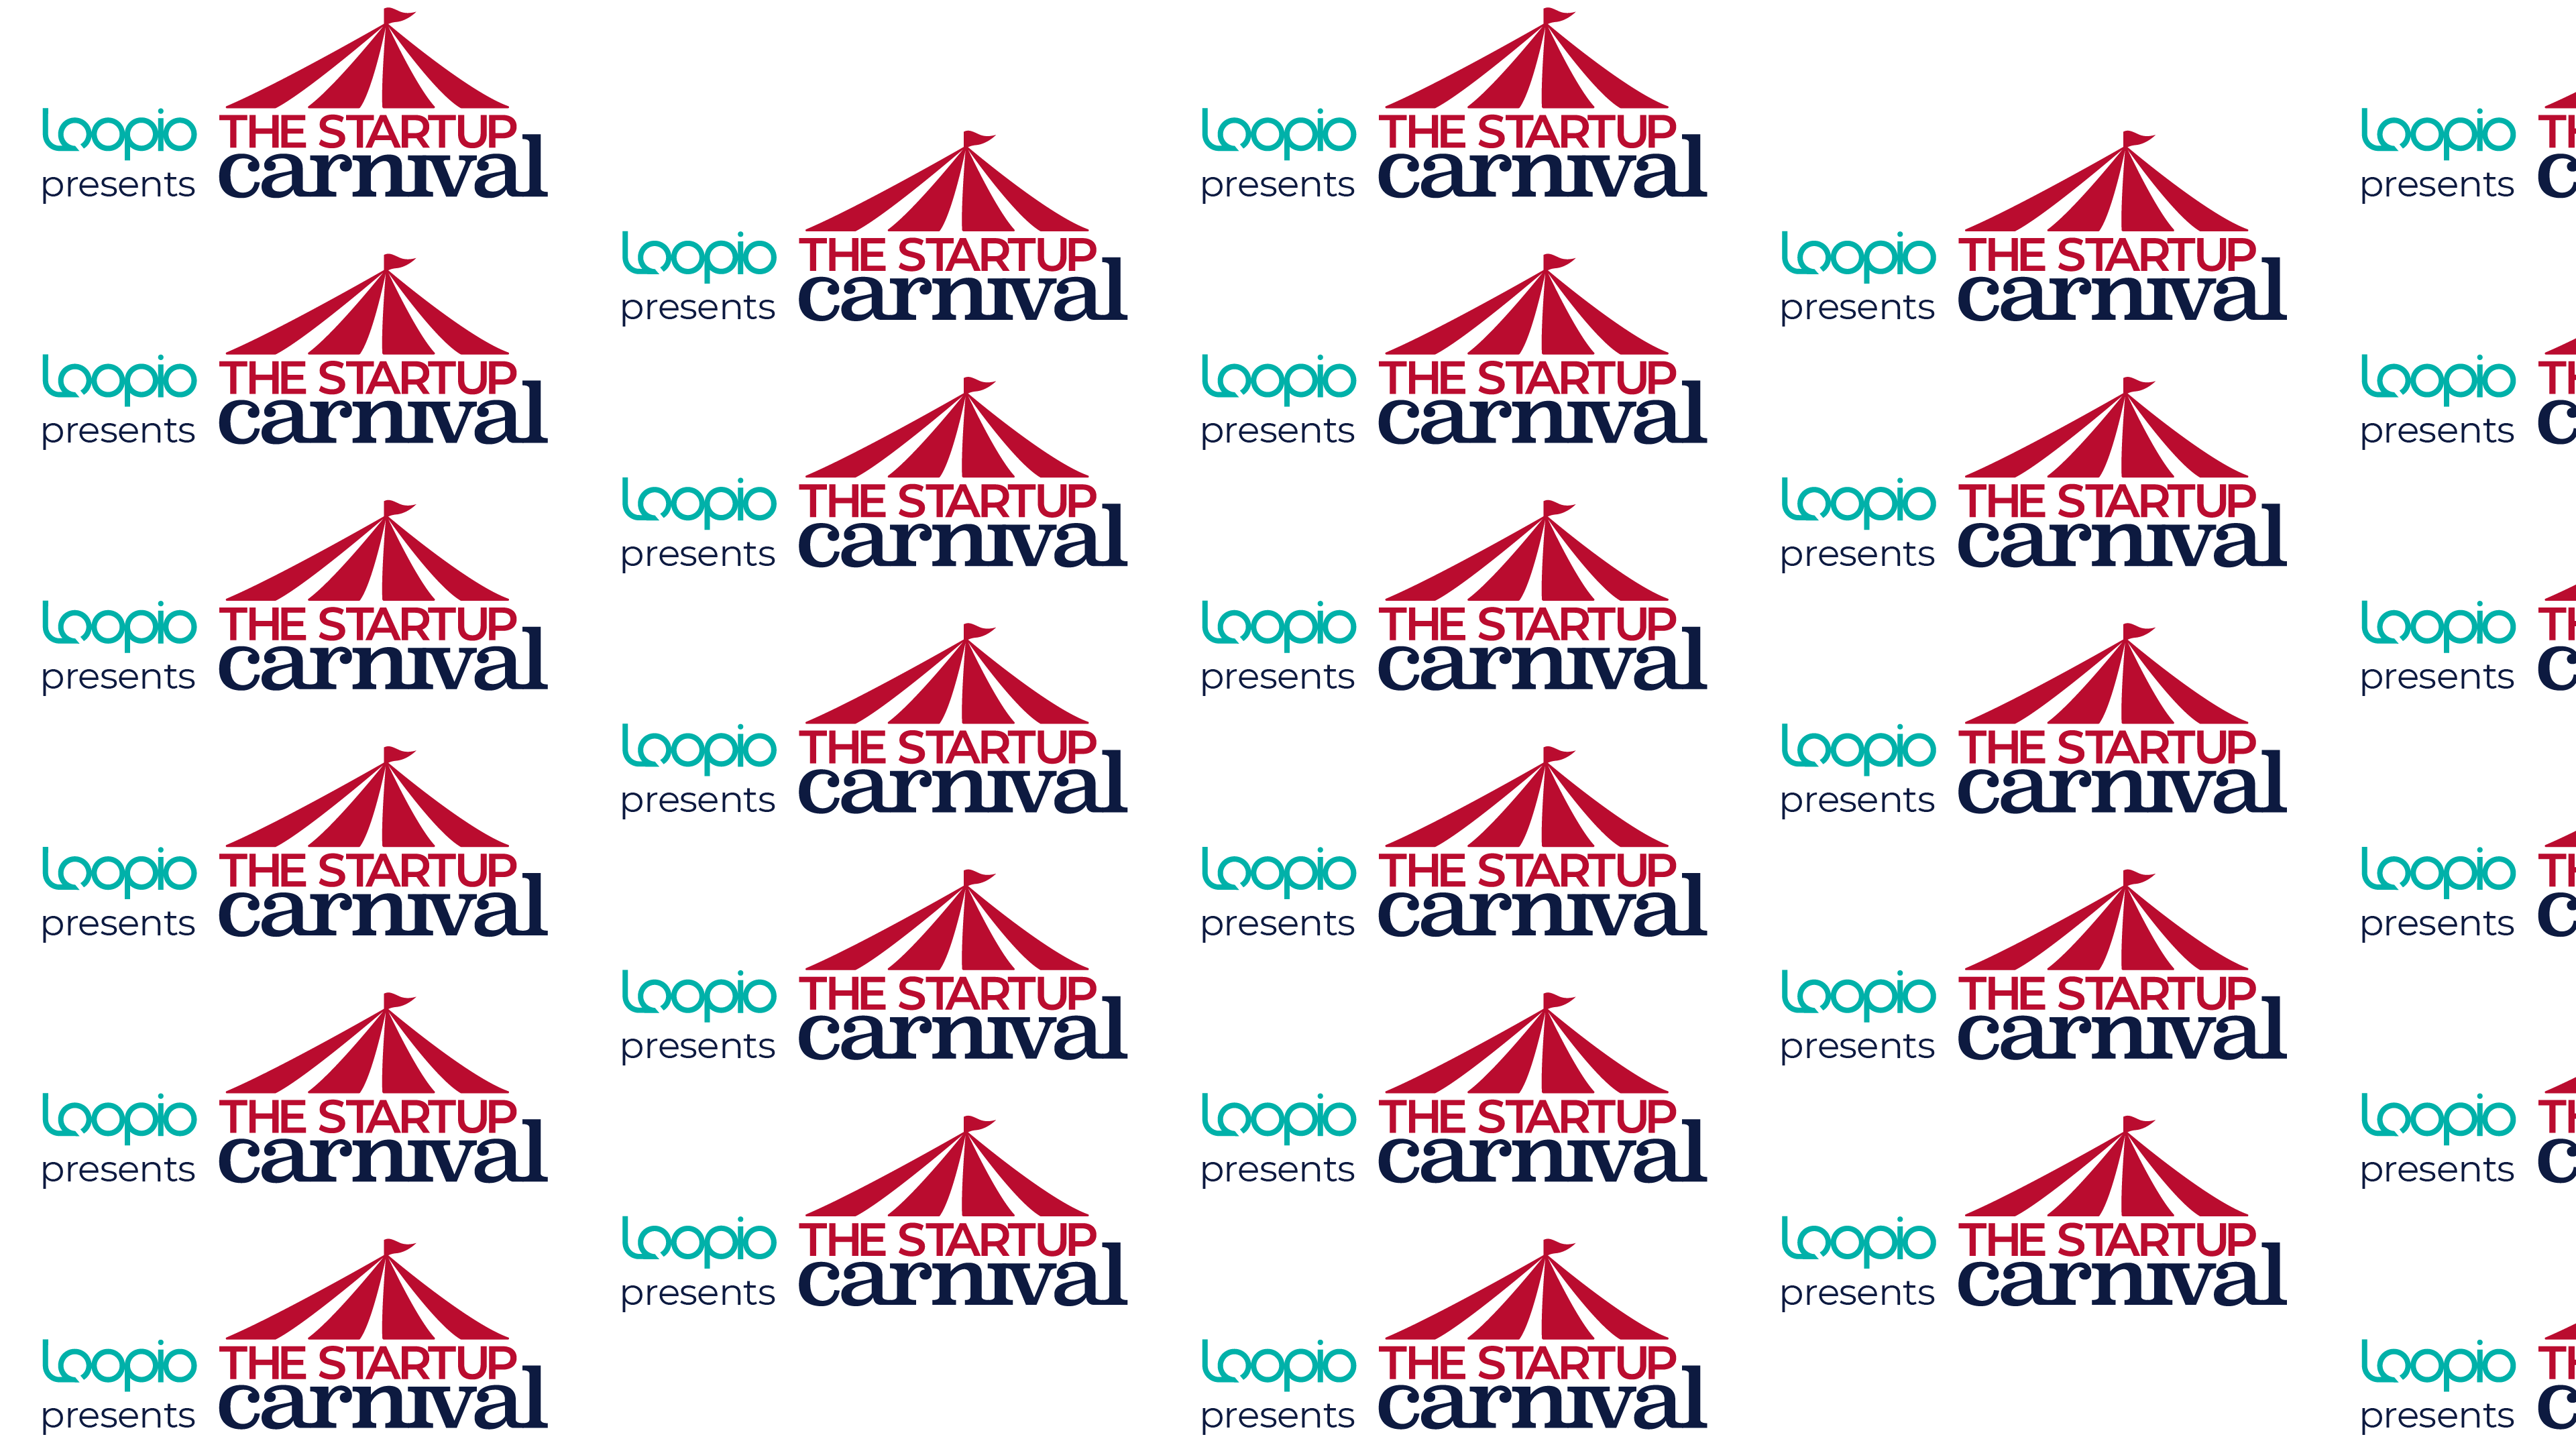 Loopio Presents: Startup Carnival 2019